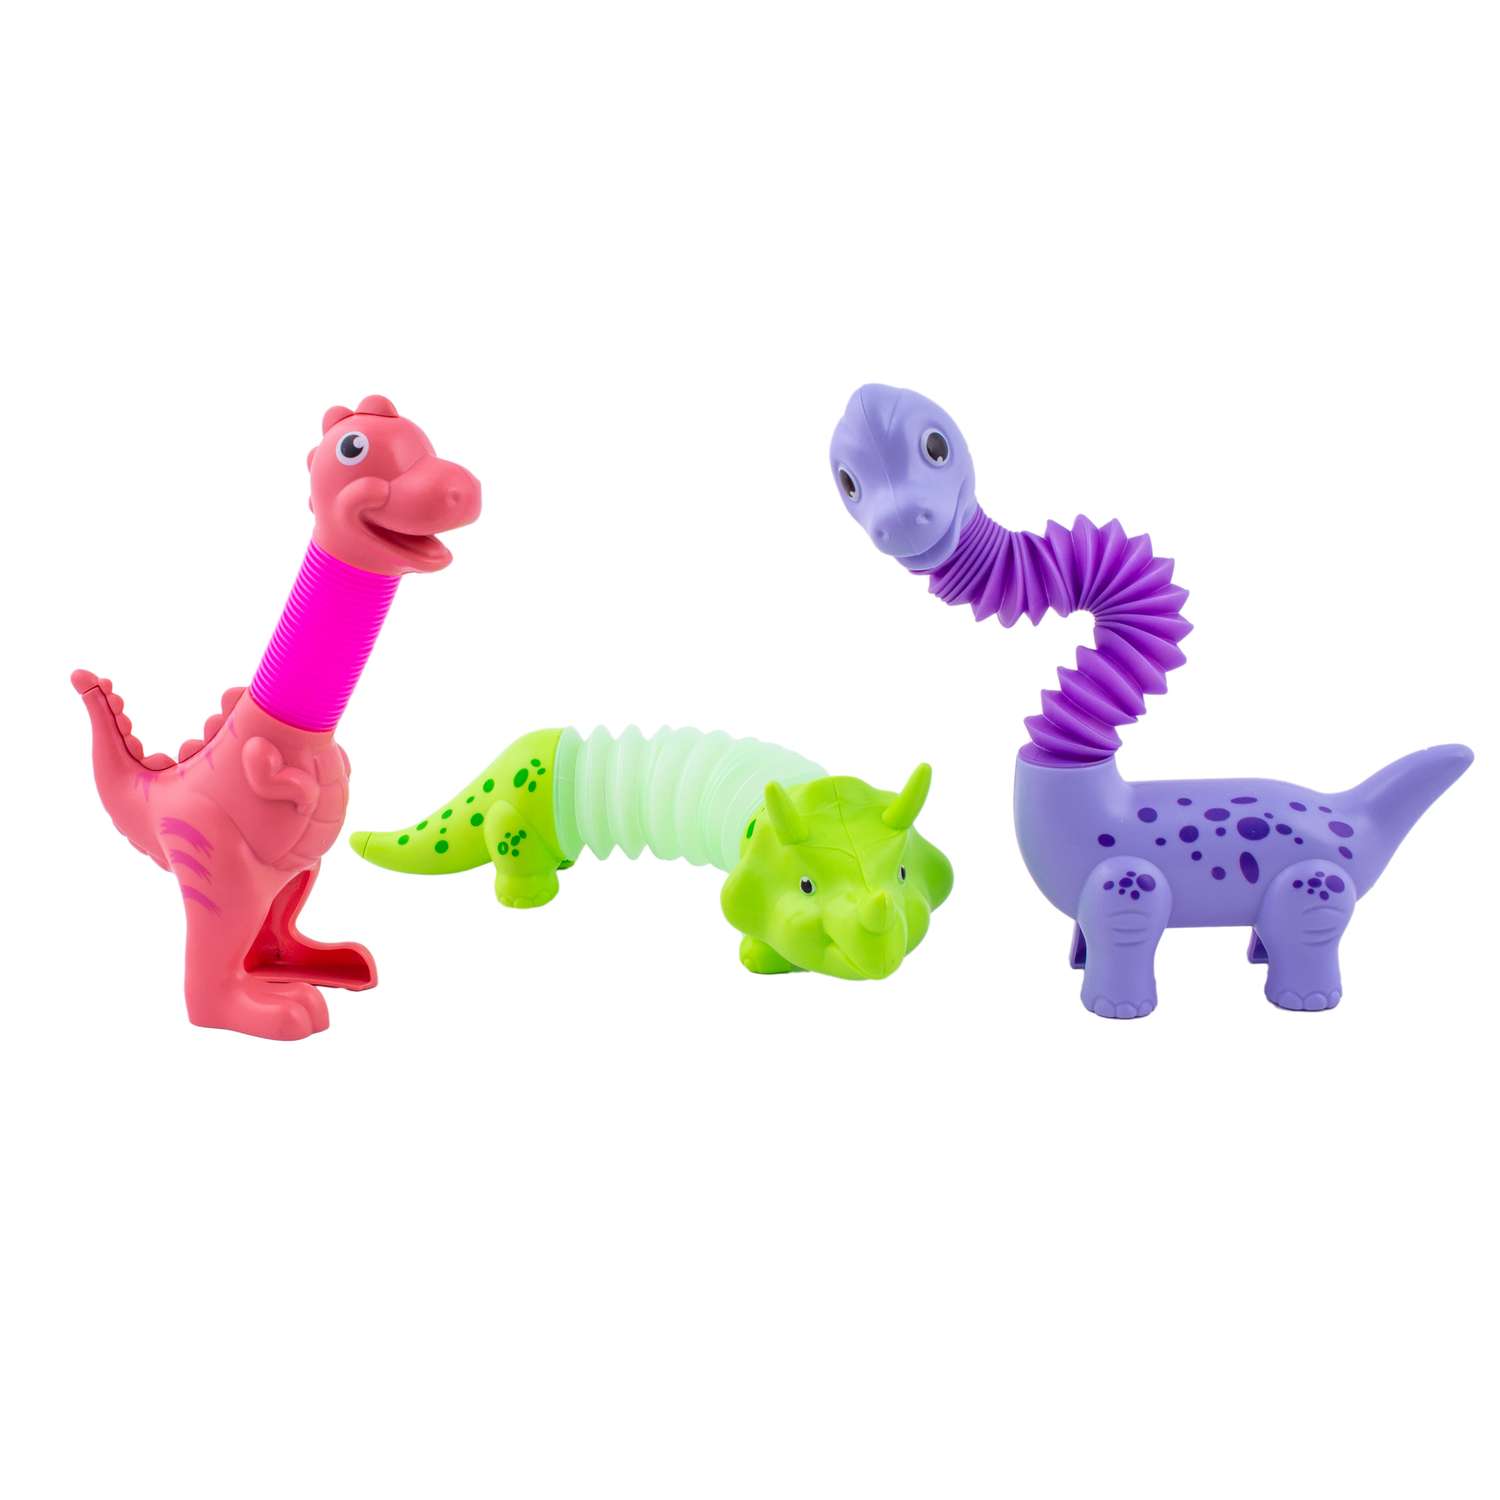 Игрушка KiddiePlay Трубозяки динозаврики в ассортименте 9510 - фото 1